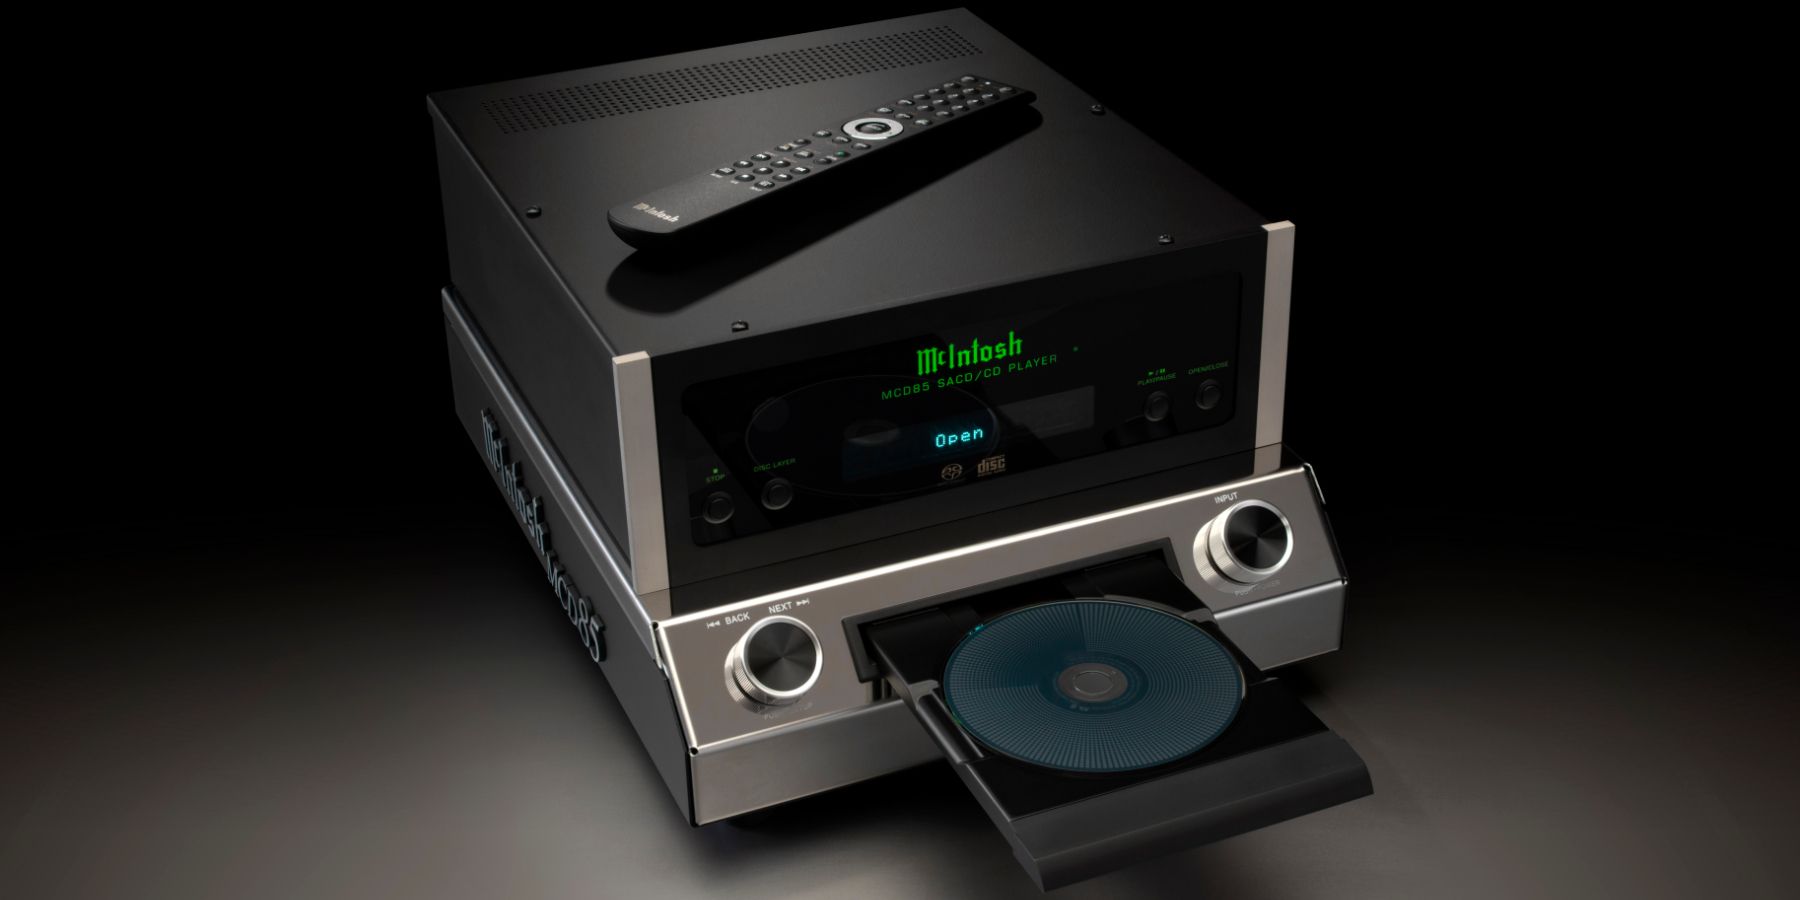 New MCD85 SACD/CD Player brings advanced McIntosh technologies to CD/SACD collections and USB devices